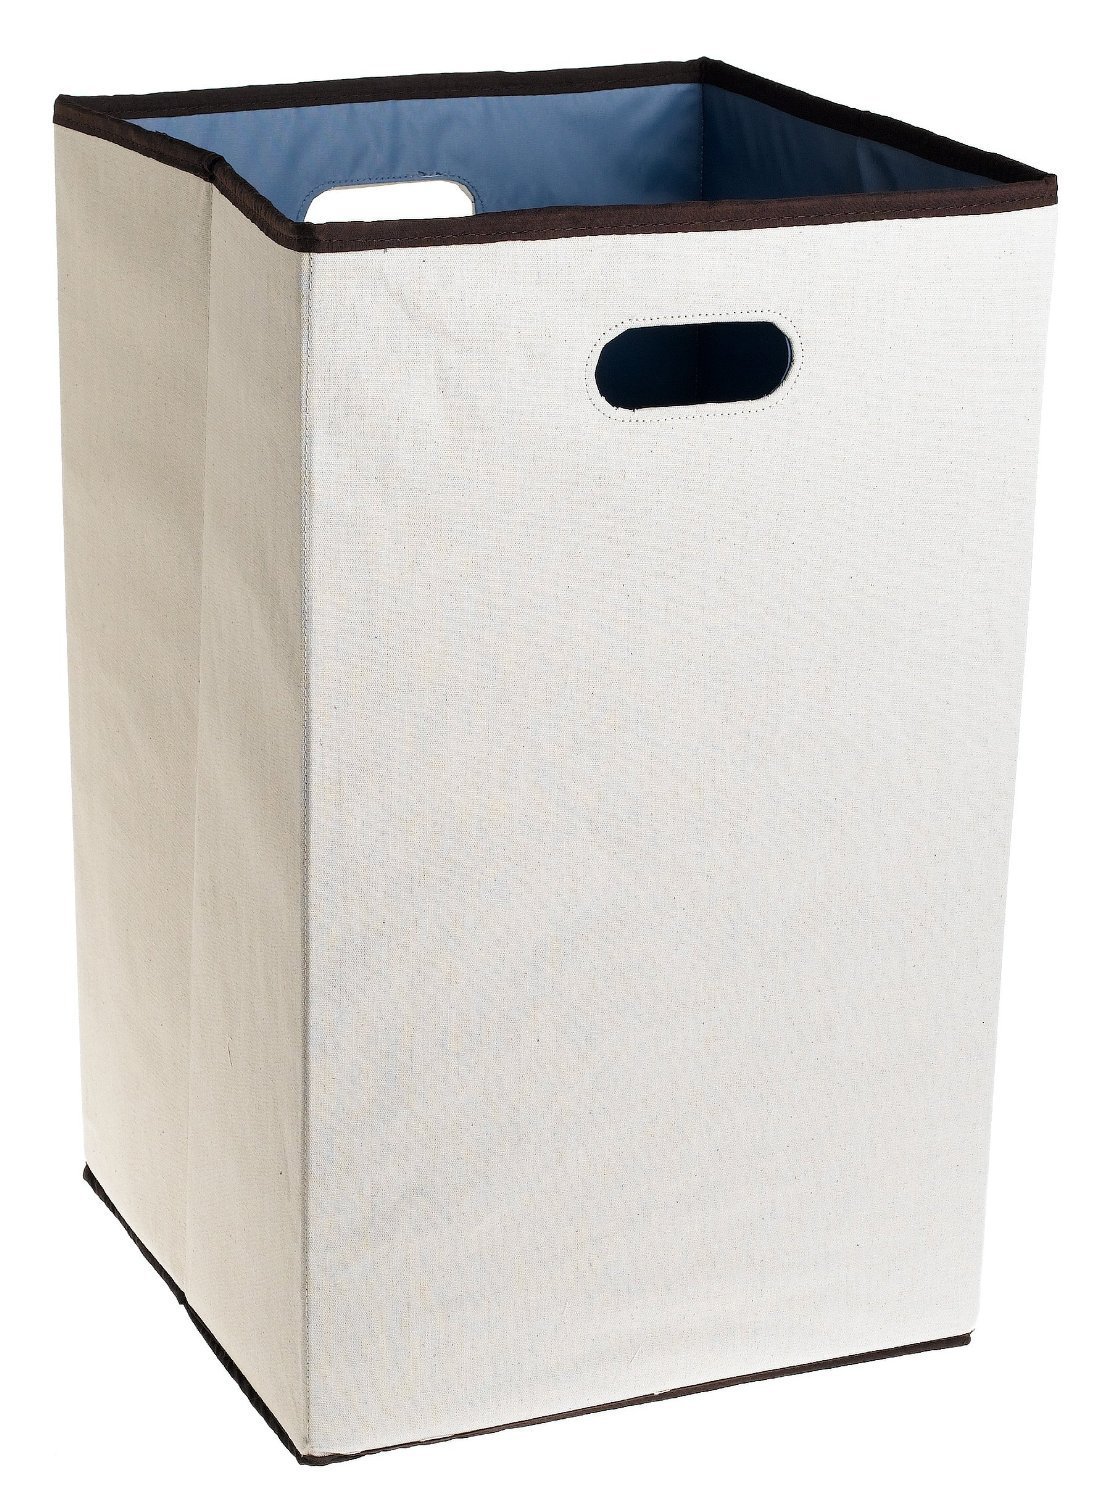 Rubbermaid Configurations Custom Closet Folding Laundry Hamper – Back again – Just $12.99!